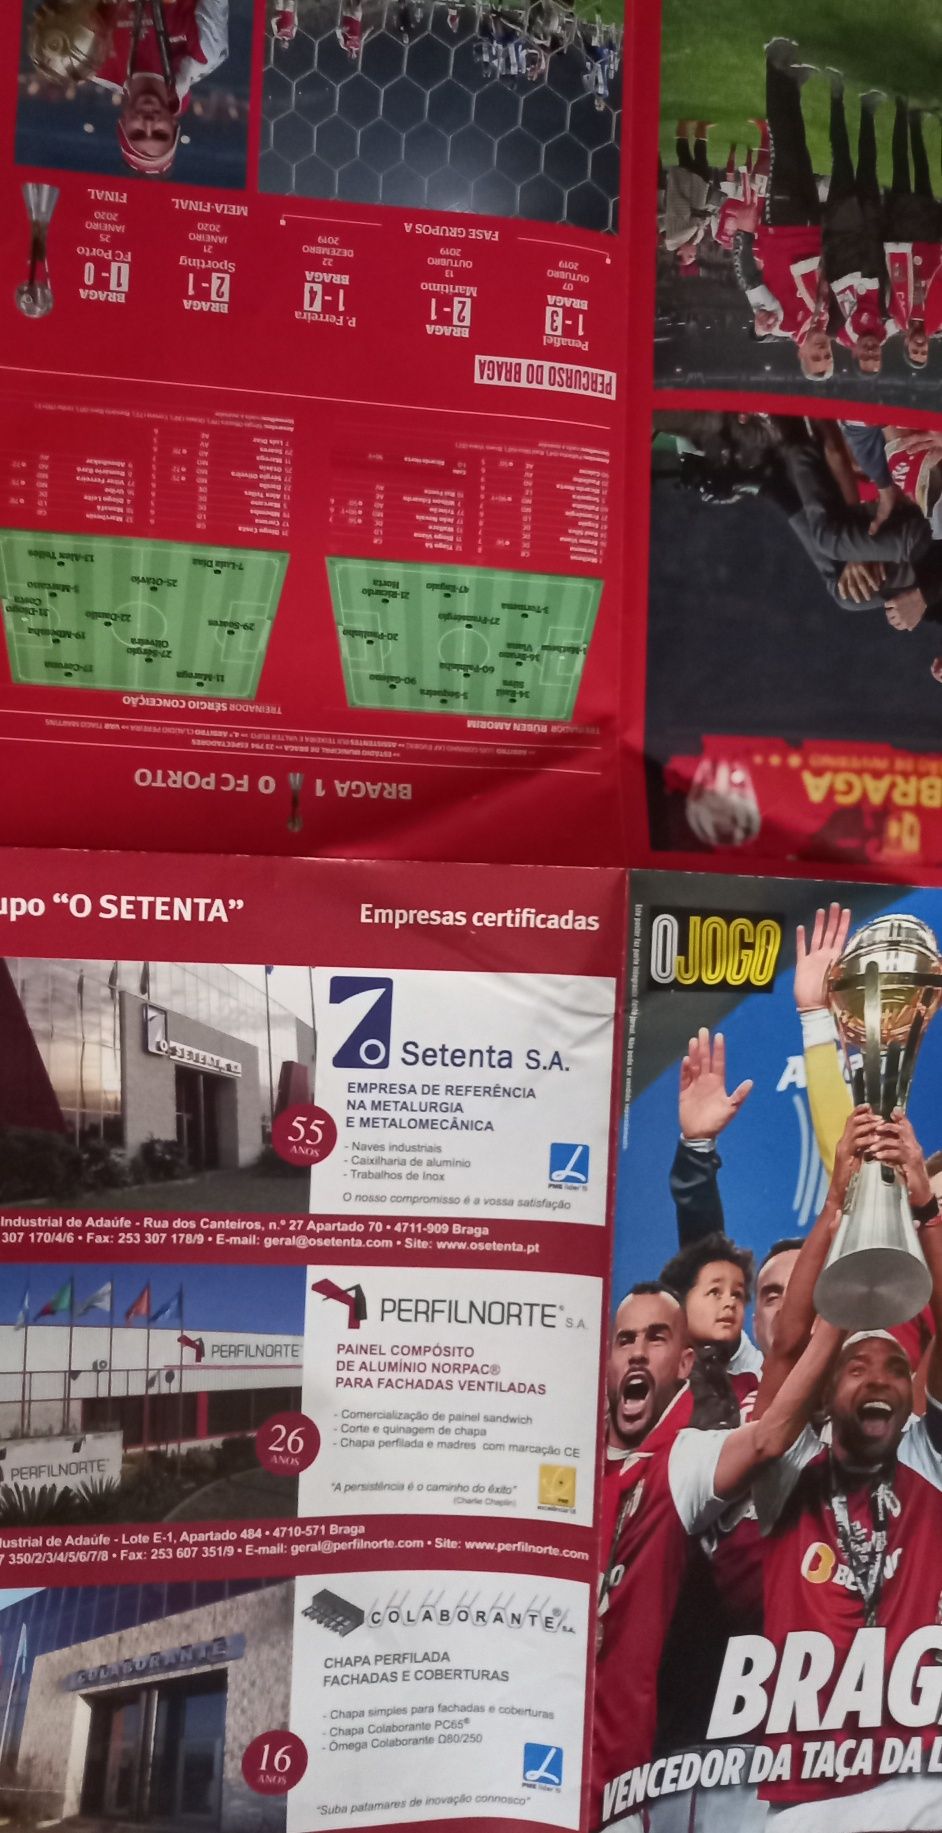 poster SCBraga vencedor da Taça da Liga 2019/20